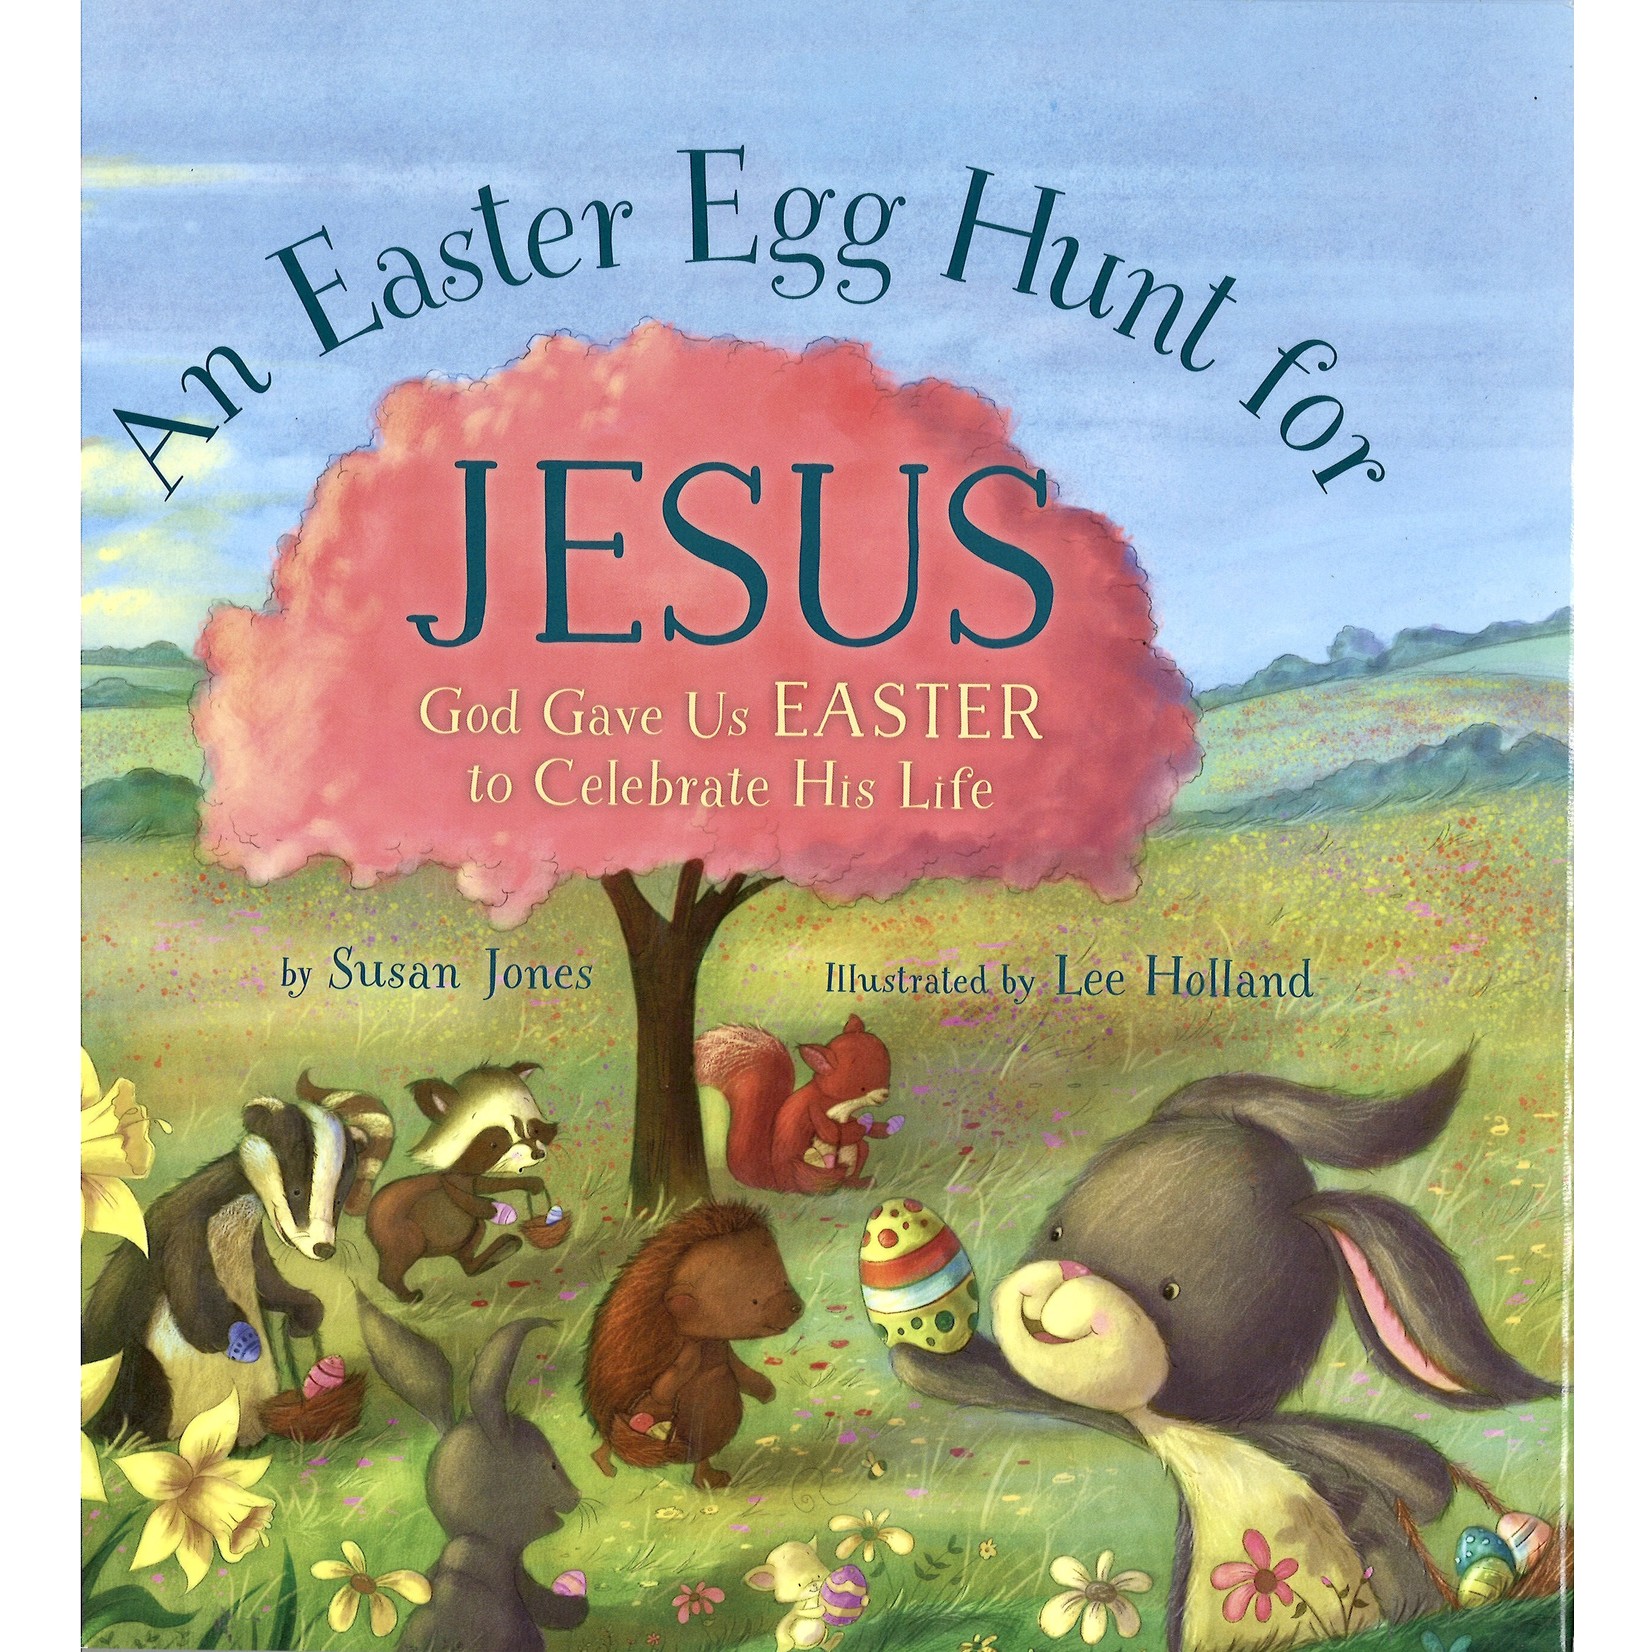 AN EASTER EGG HUNT FOR JESUS